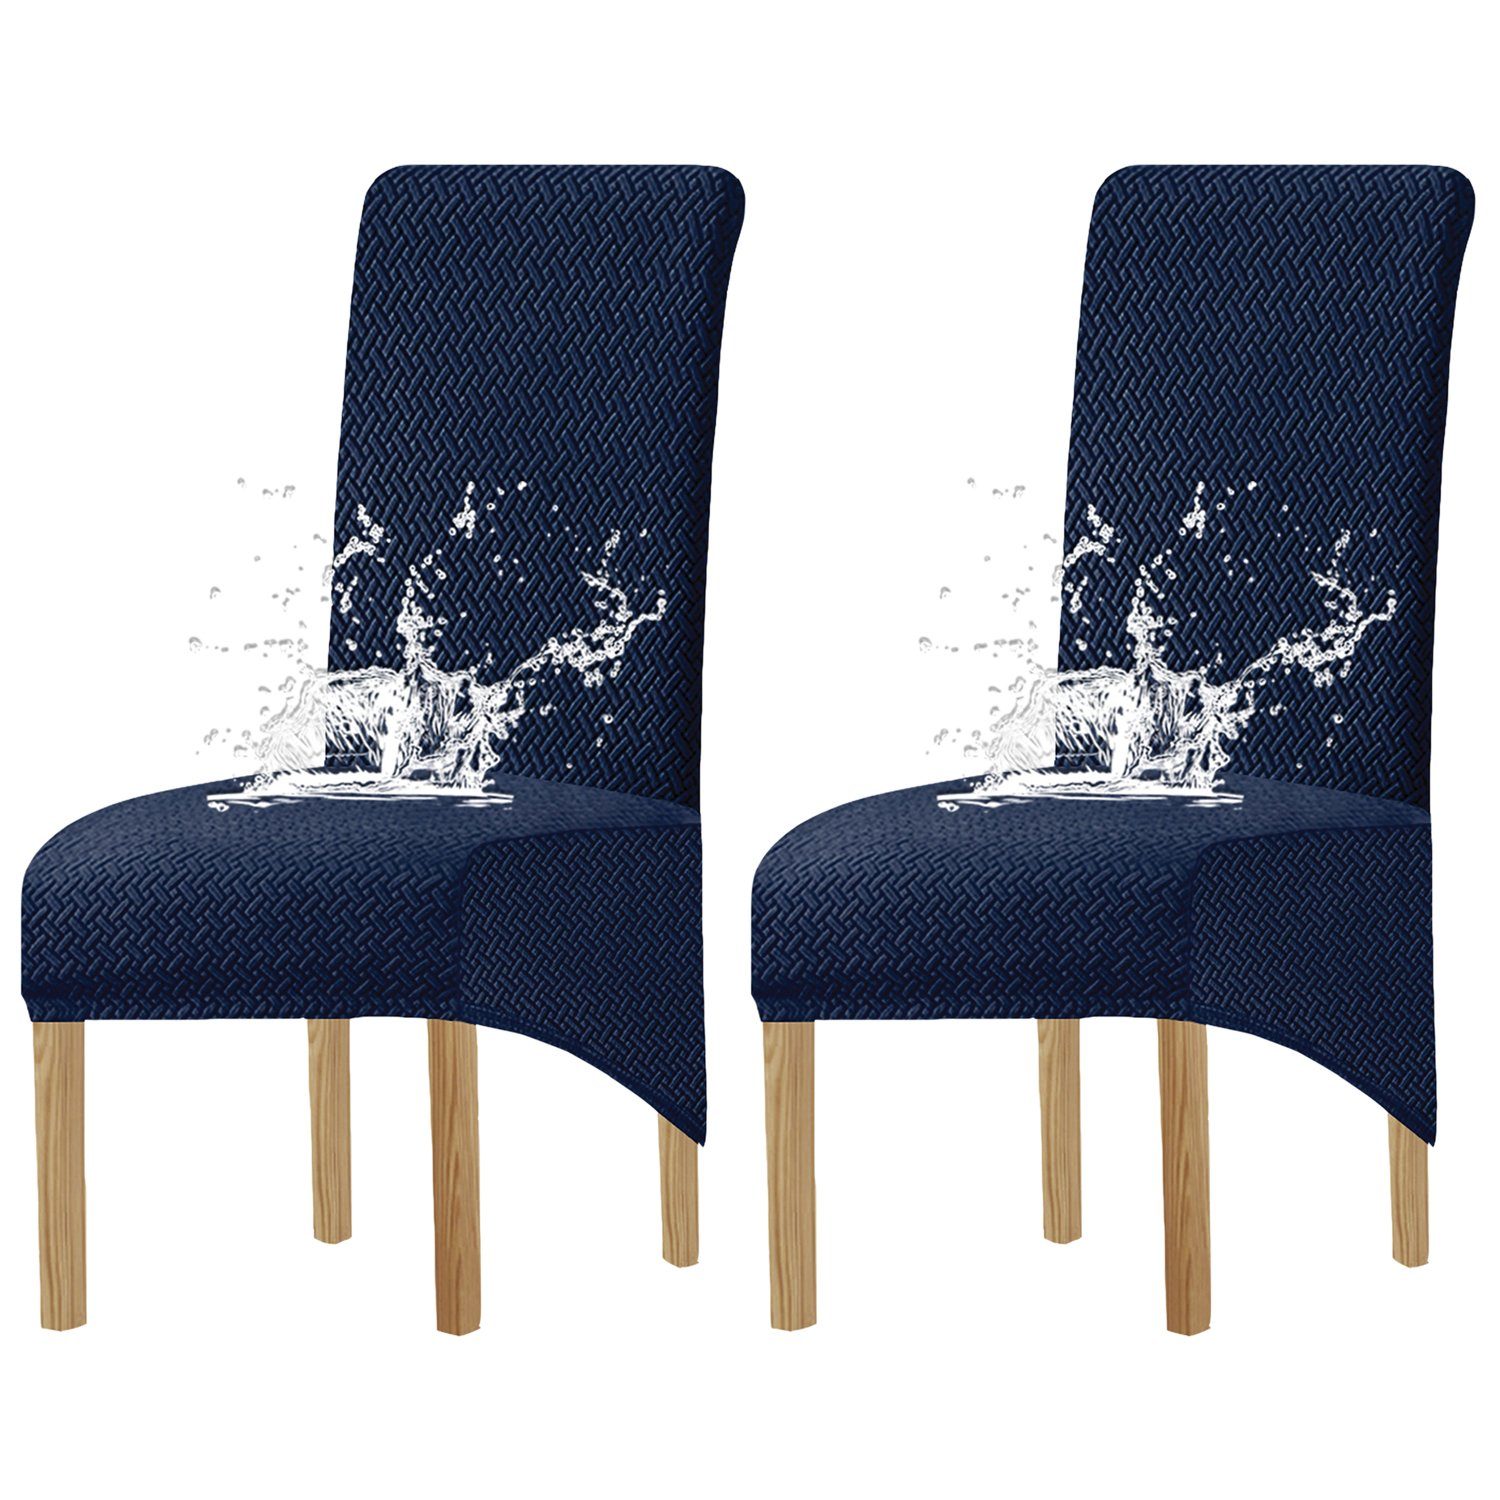 HOMEIDEAS, Stretch übergroß Stuhlbezug geflochtene Jacquard Stuhlhusse, Blau Textur